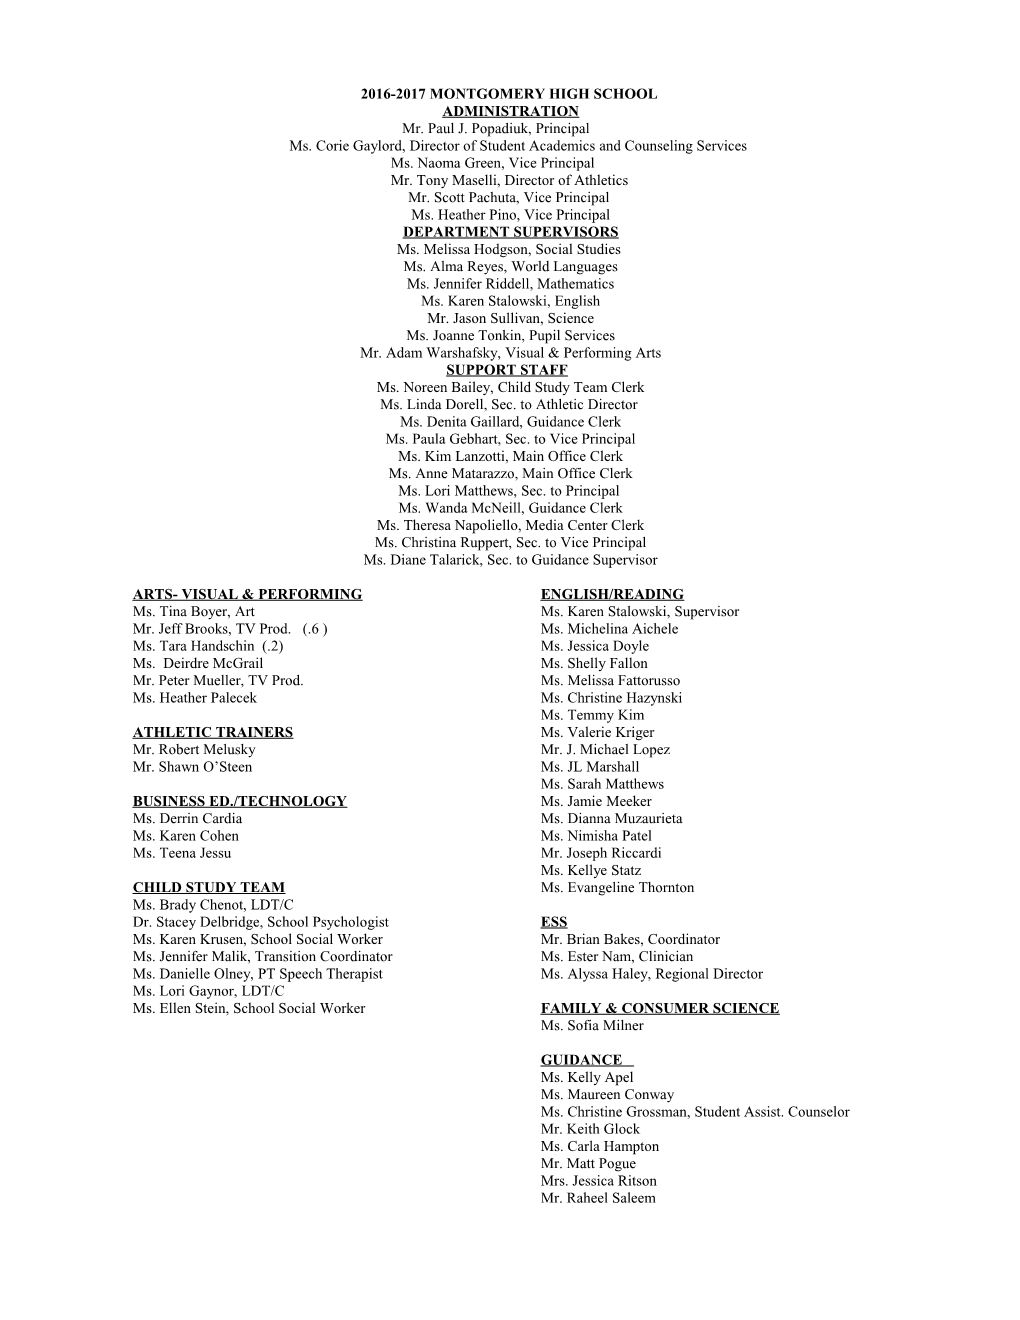 2003-04 Montgomery High School Staff Directory